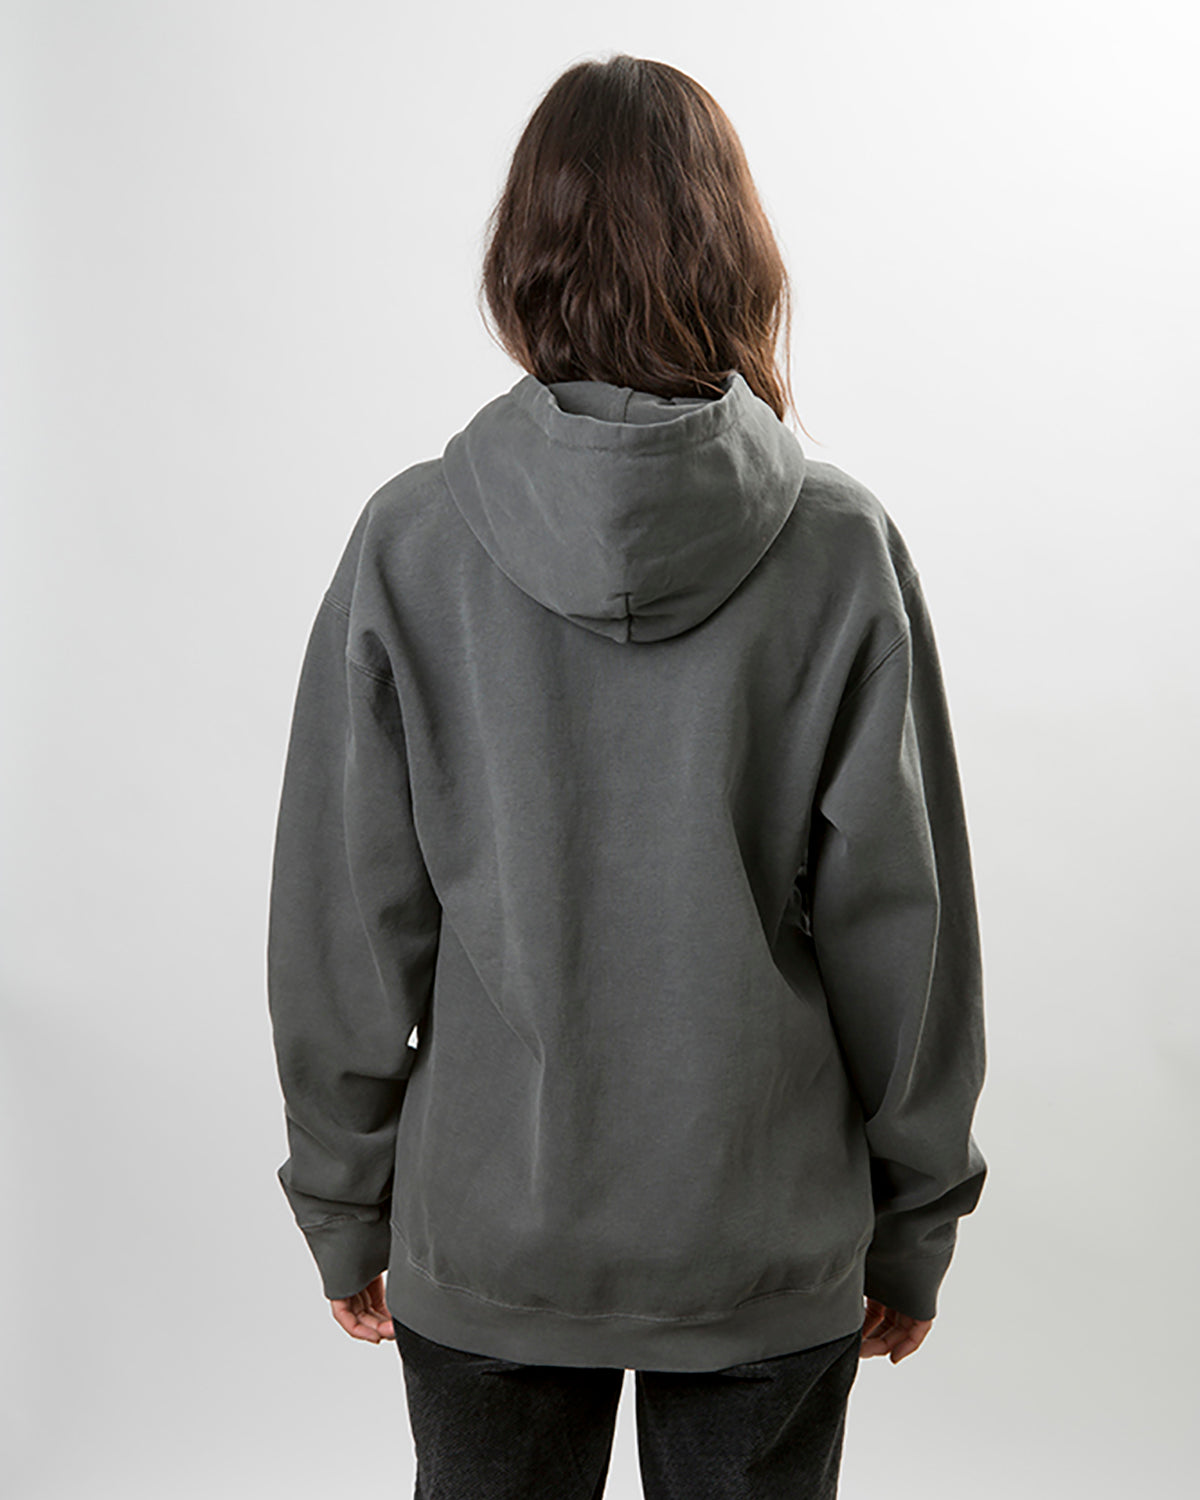 9.5 oz Garment Dyed Hooded Sweatshirt (CC-1567)